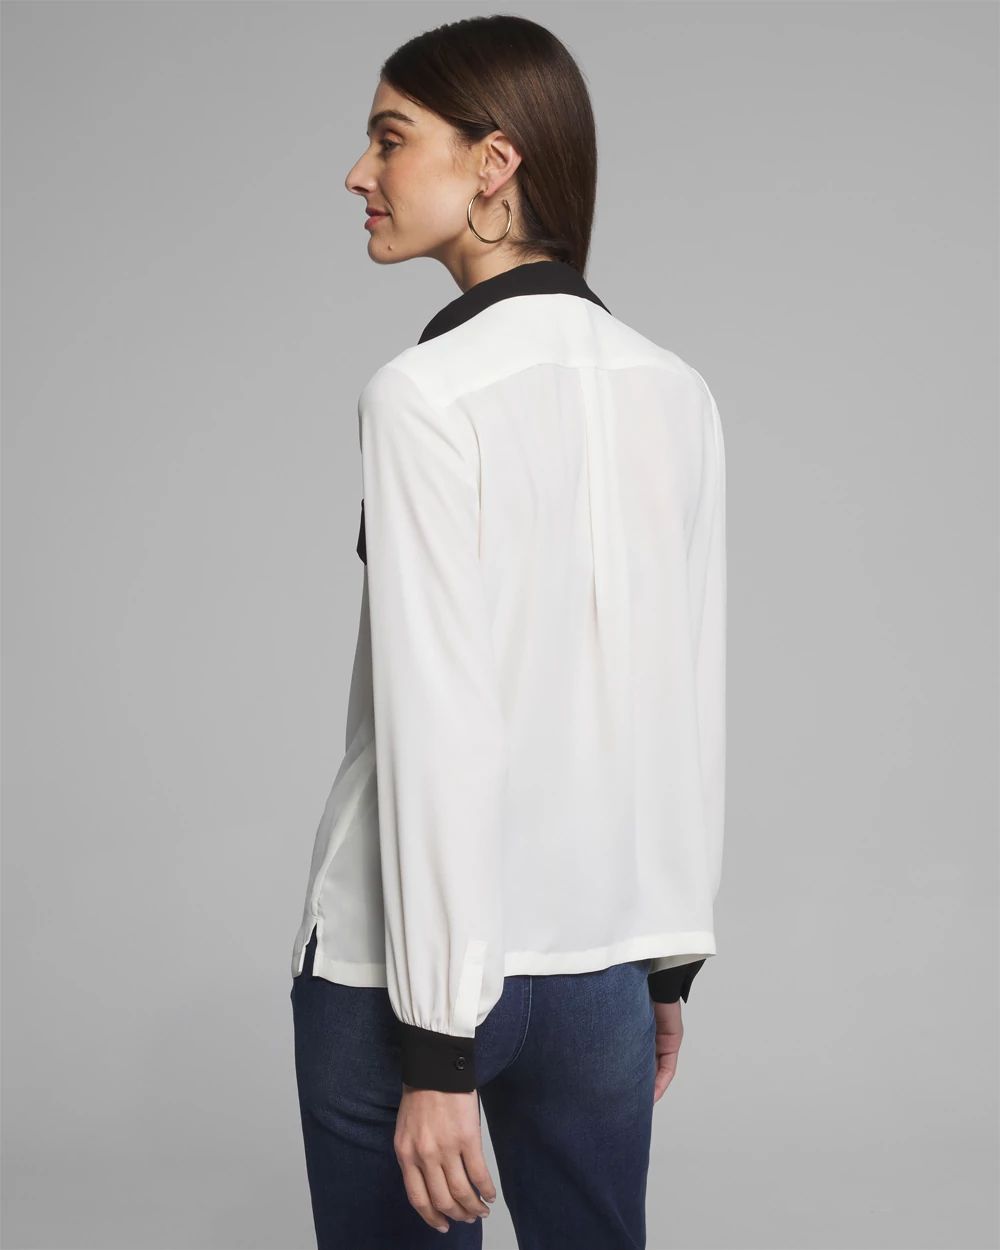 Outlet WHBM Long Sleeve Collar Soft Shirt